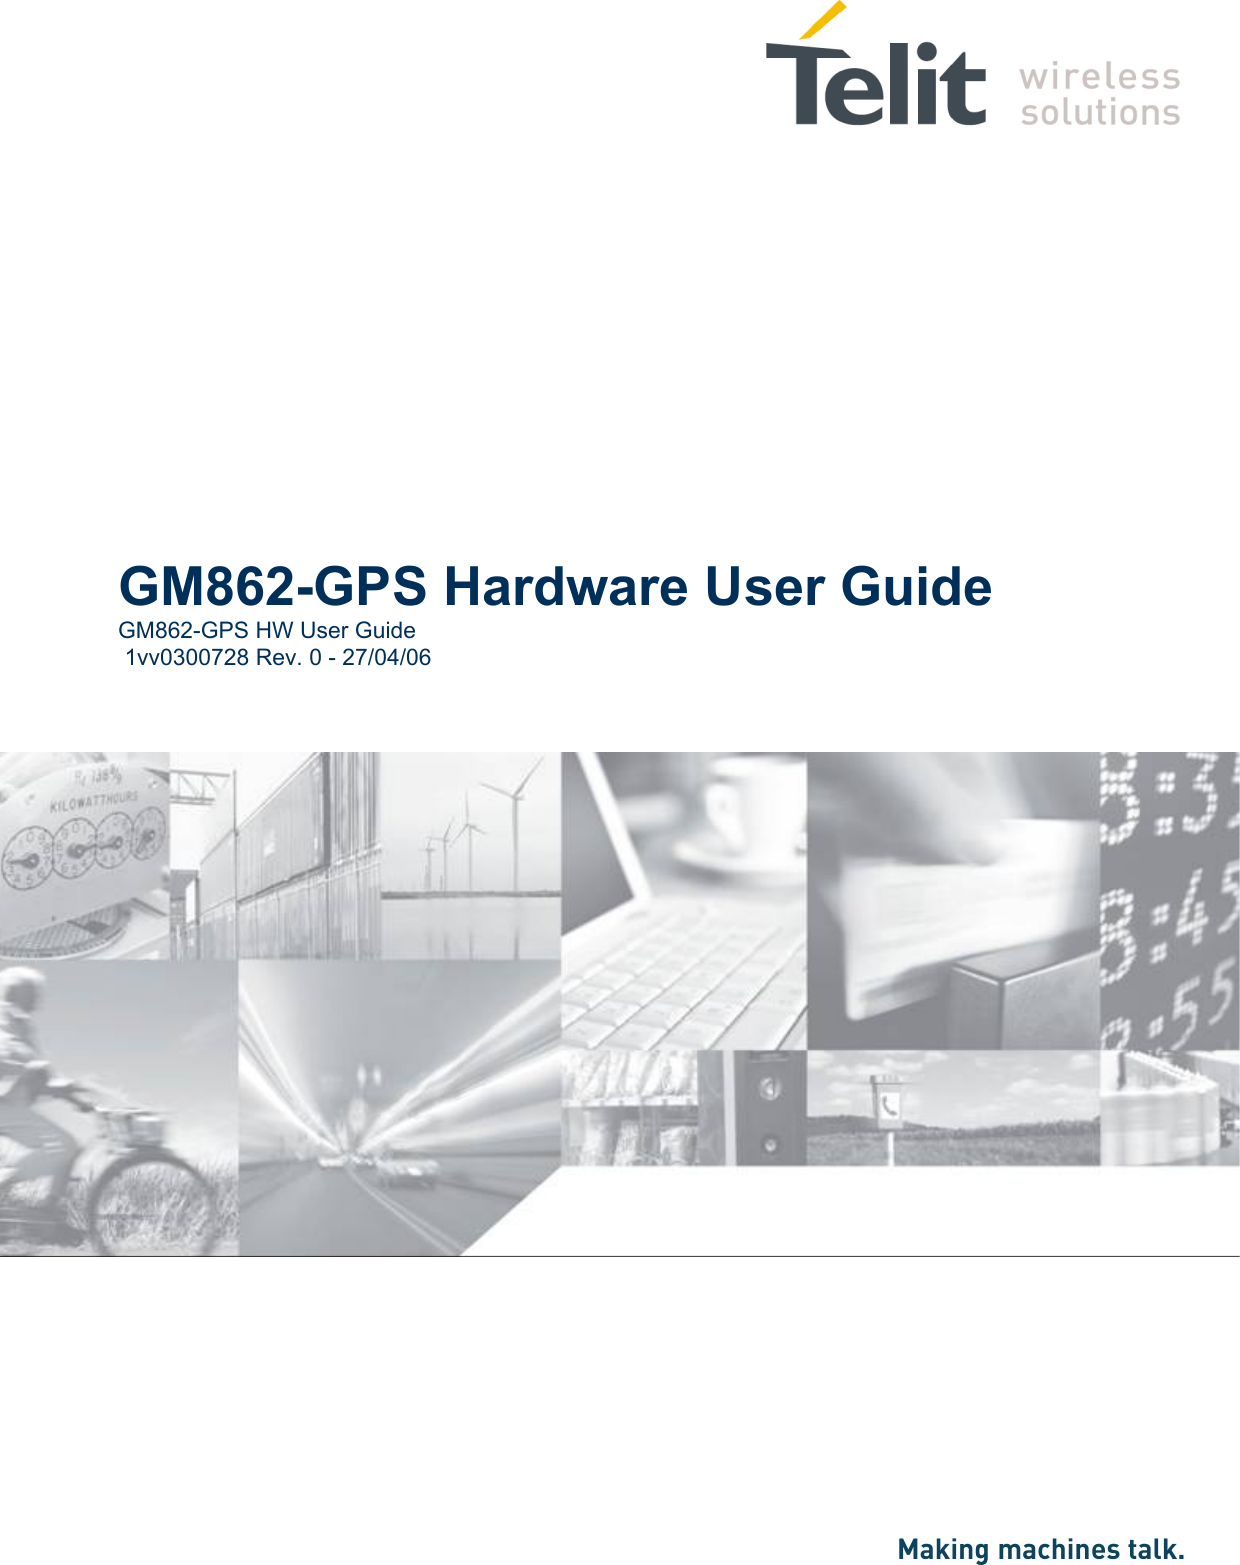                GM862-GPS Hardware User Guide GM862-GPS HW User Guide  1vv0300728 Rev. 0 - 27/04/06         